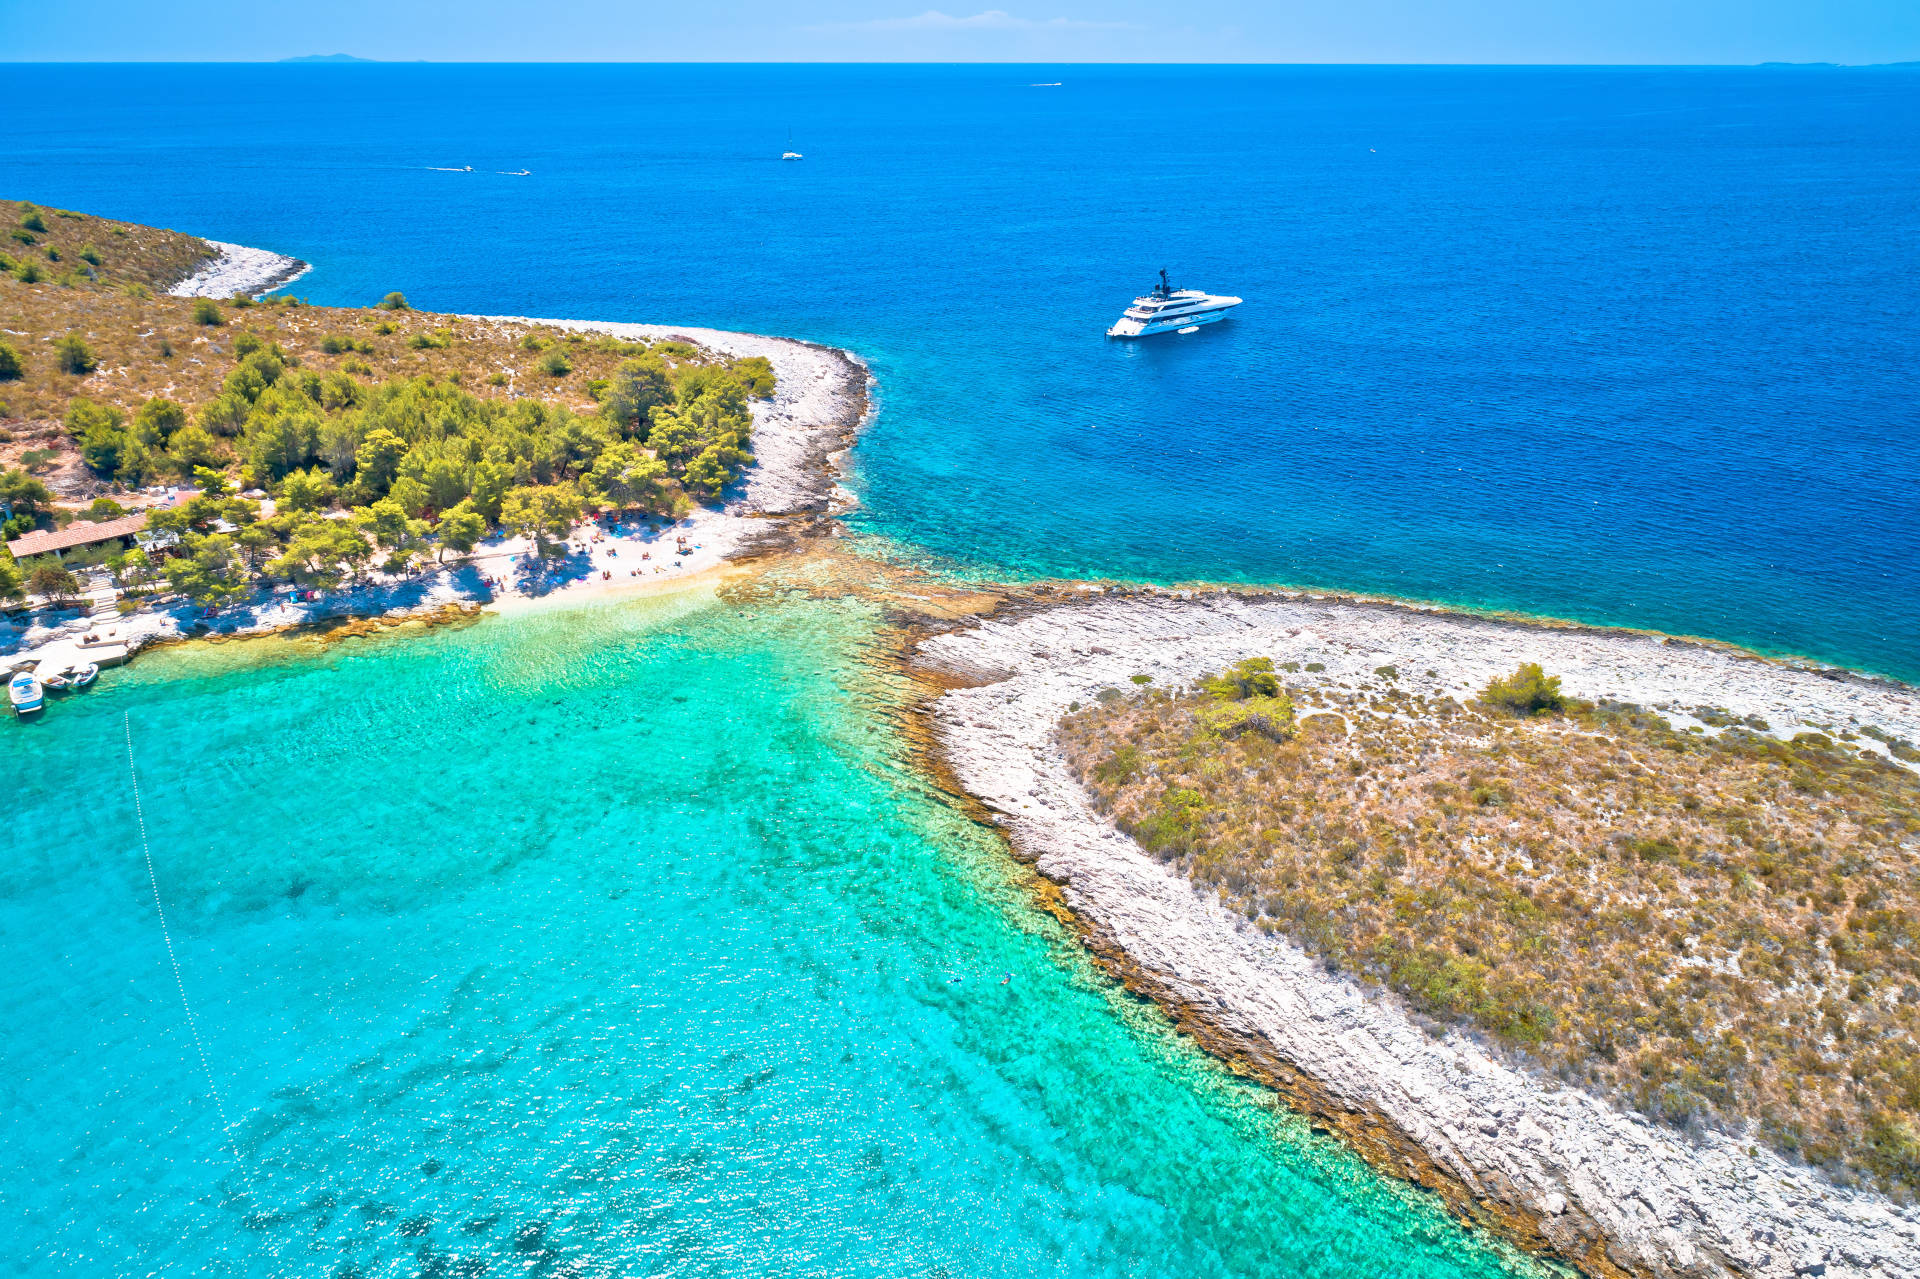 Yacht charter Split Croatia - "A Perfect Mix: 14 Days from Kornati to Vis, Hvar, and Korcula - The Best of Croatia's Islands"